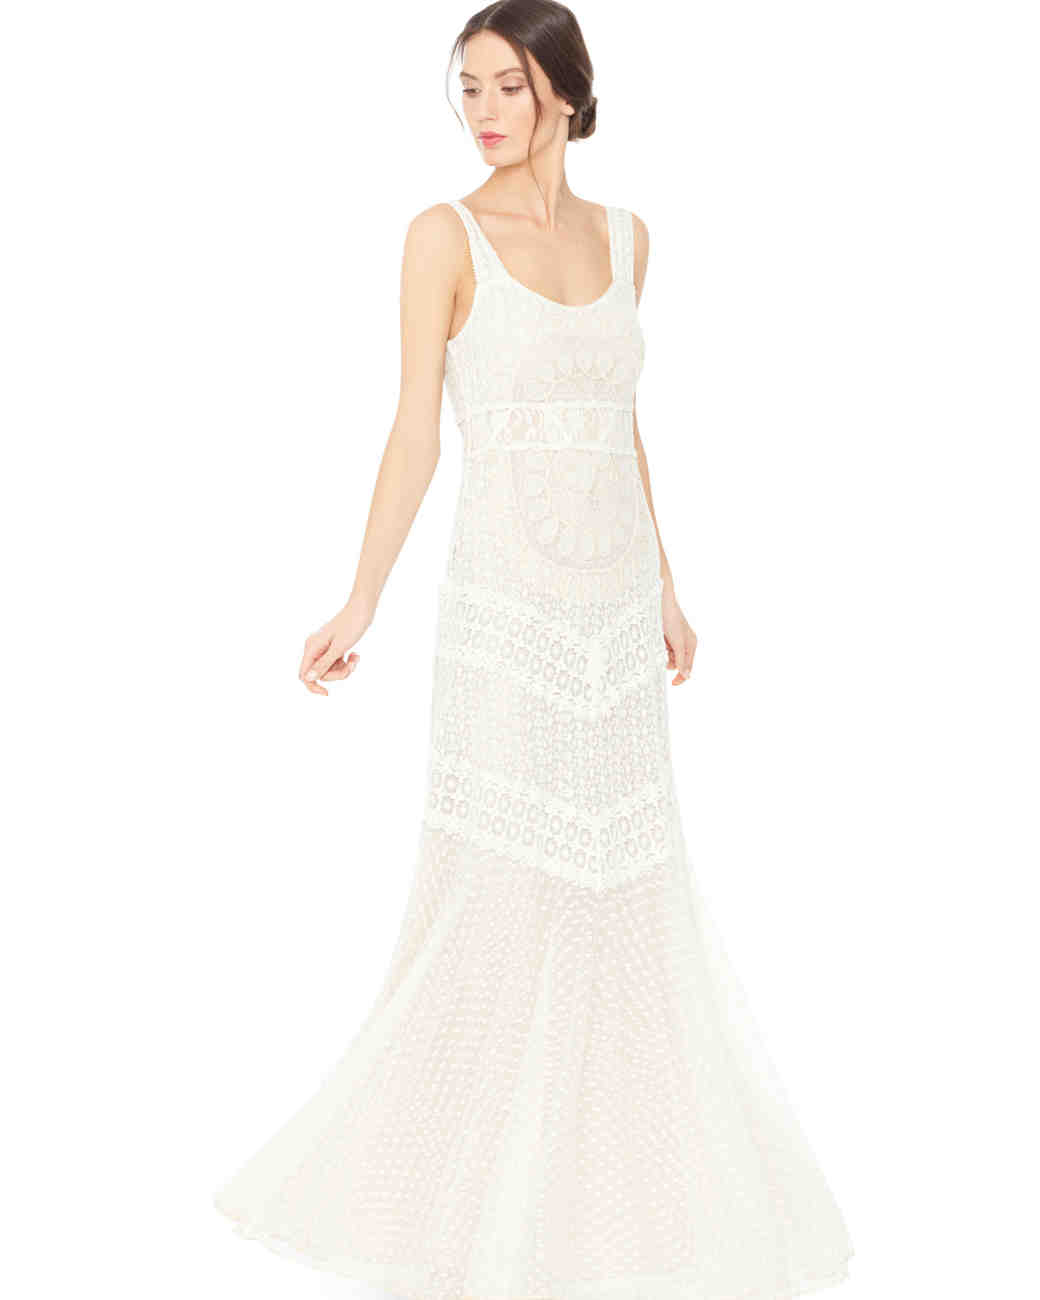 Best Dresses to Wear to a Bridal Shower This Spring | Martha Stewart ...